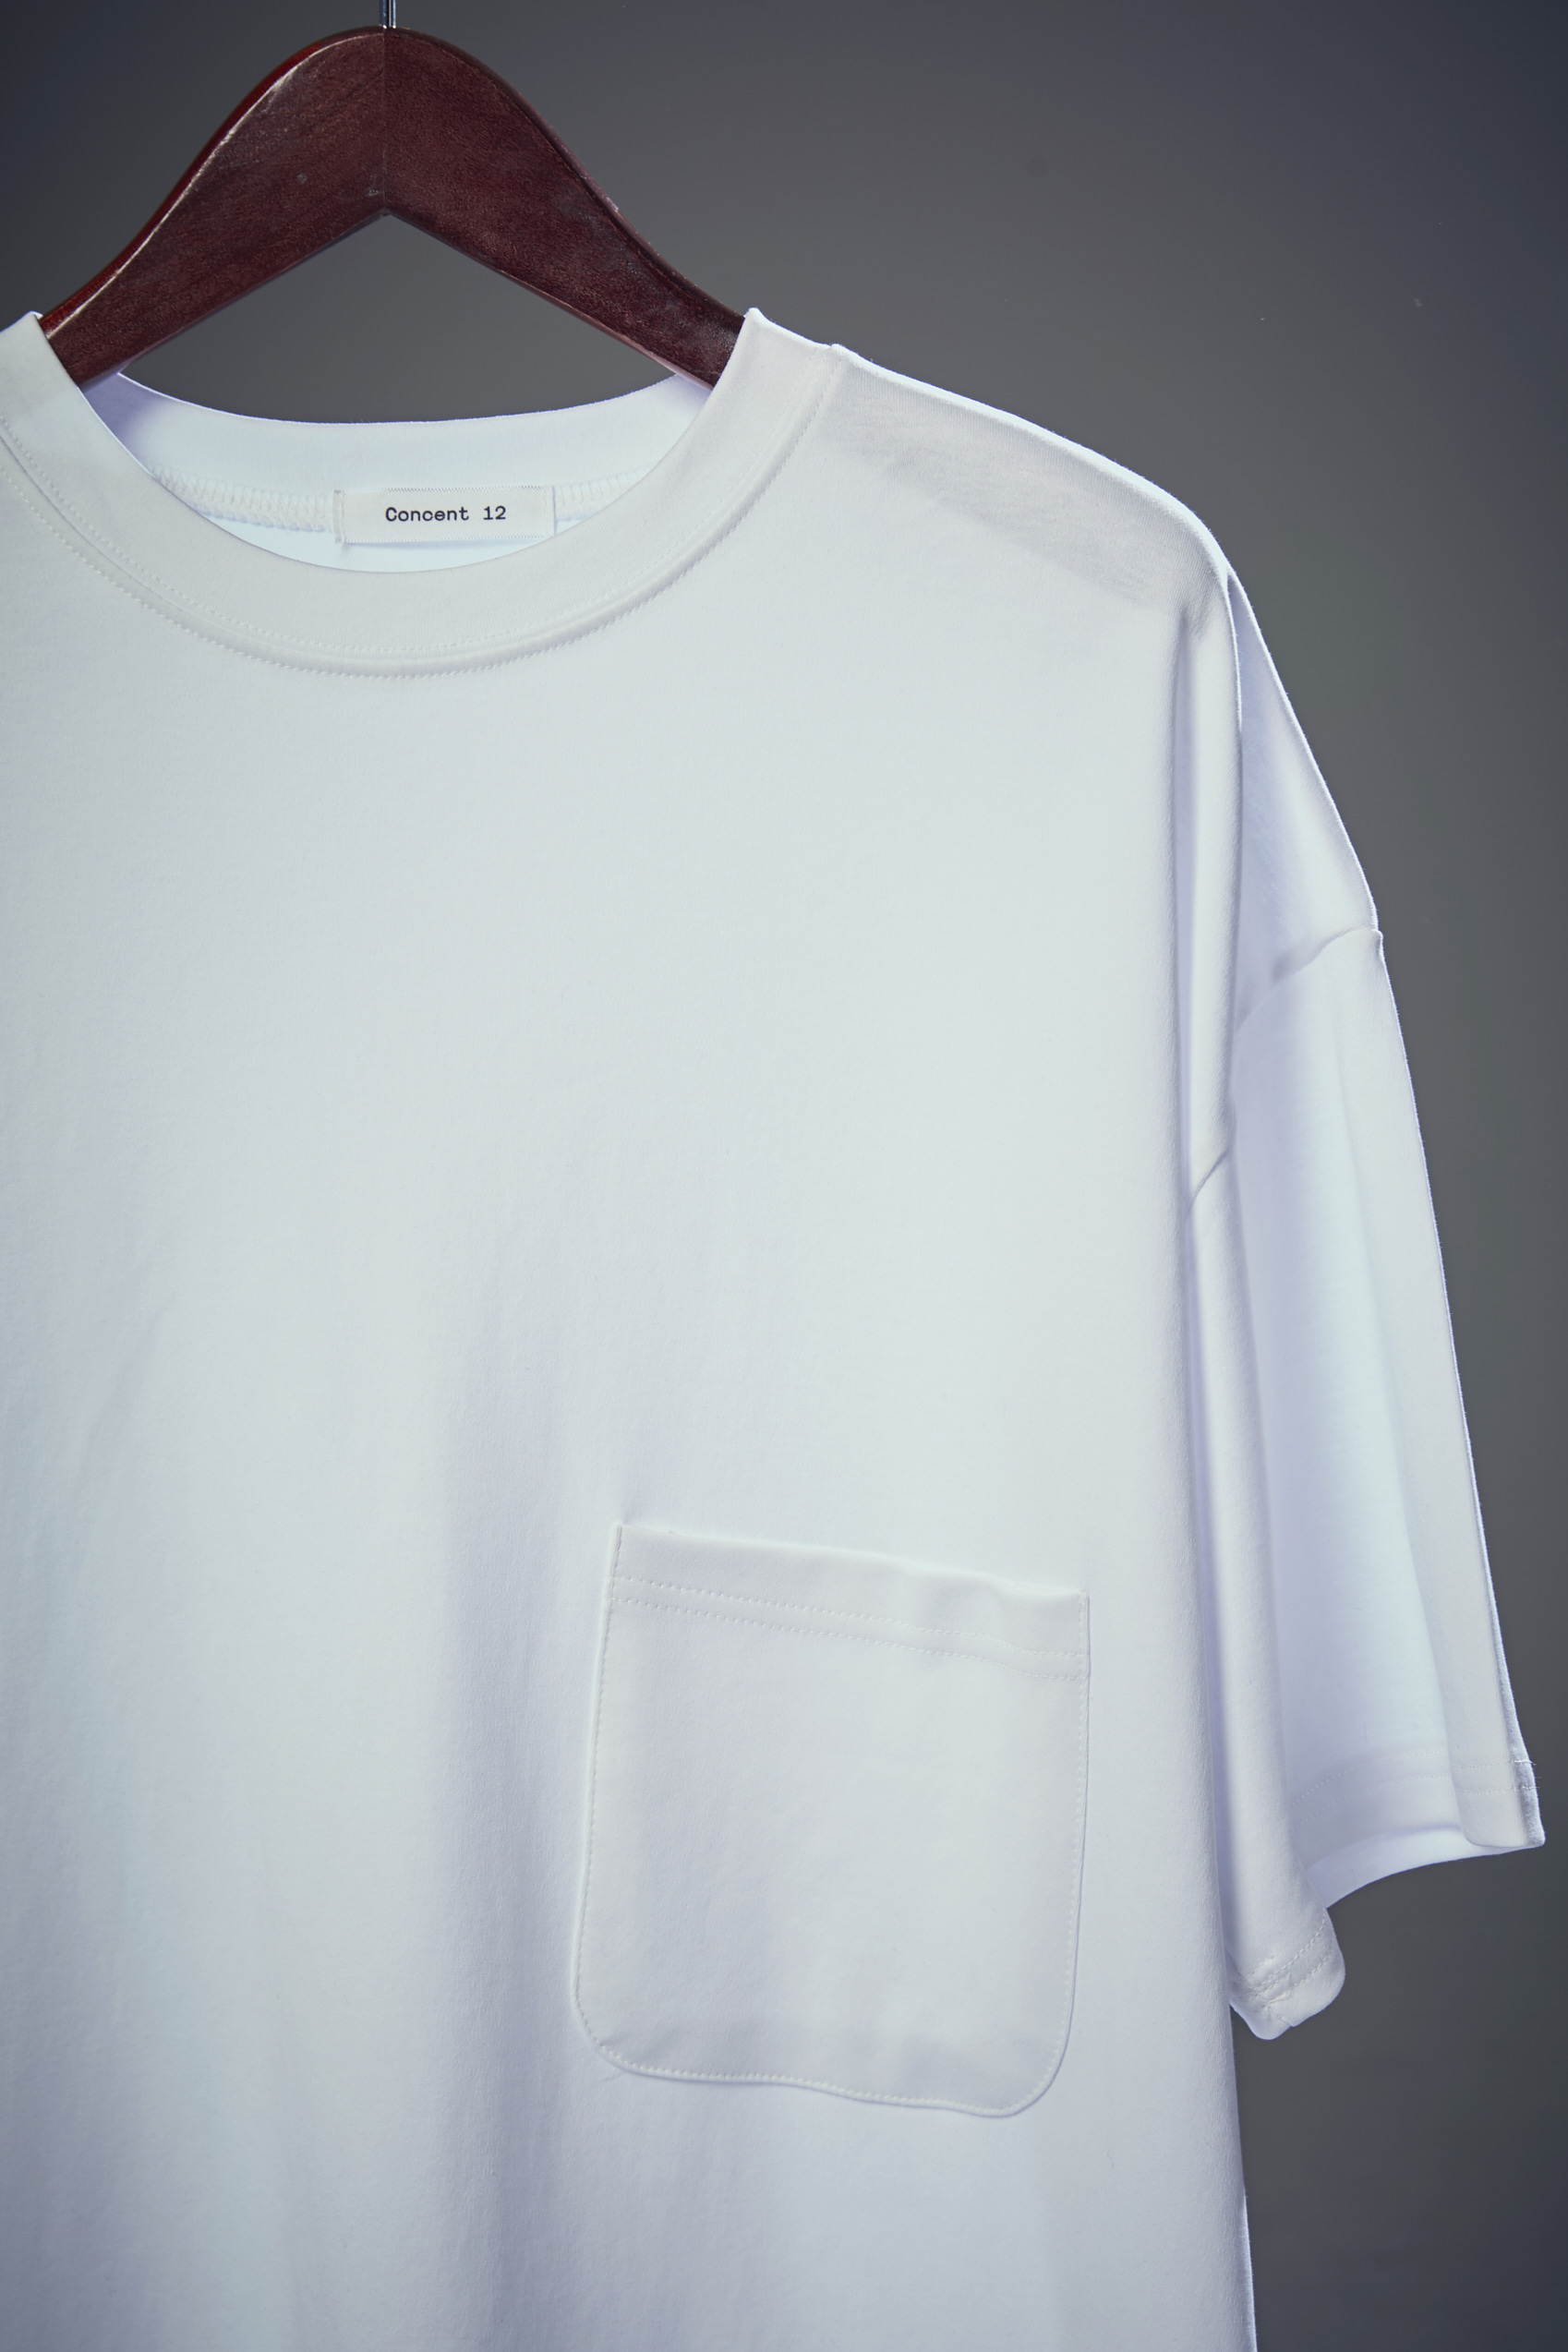 Overfit Pocket Half T shirt Ivory